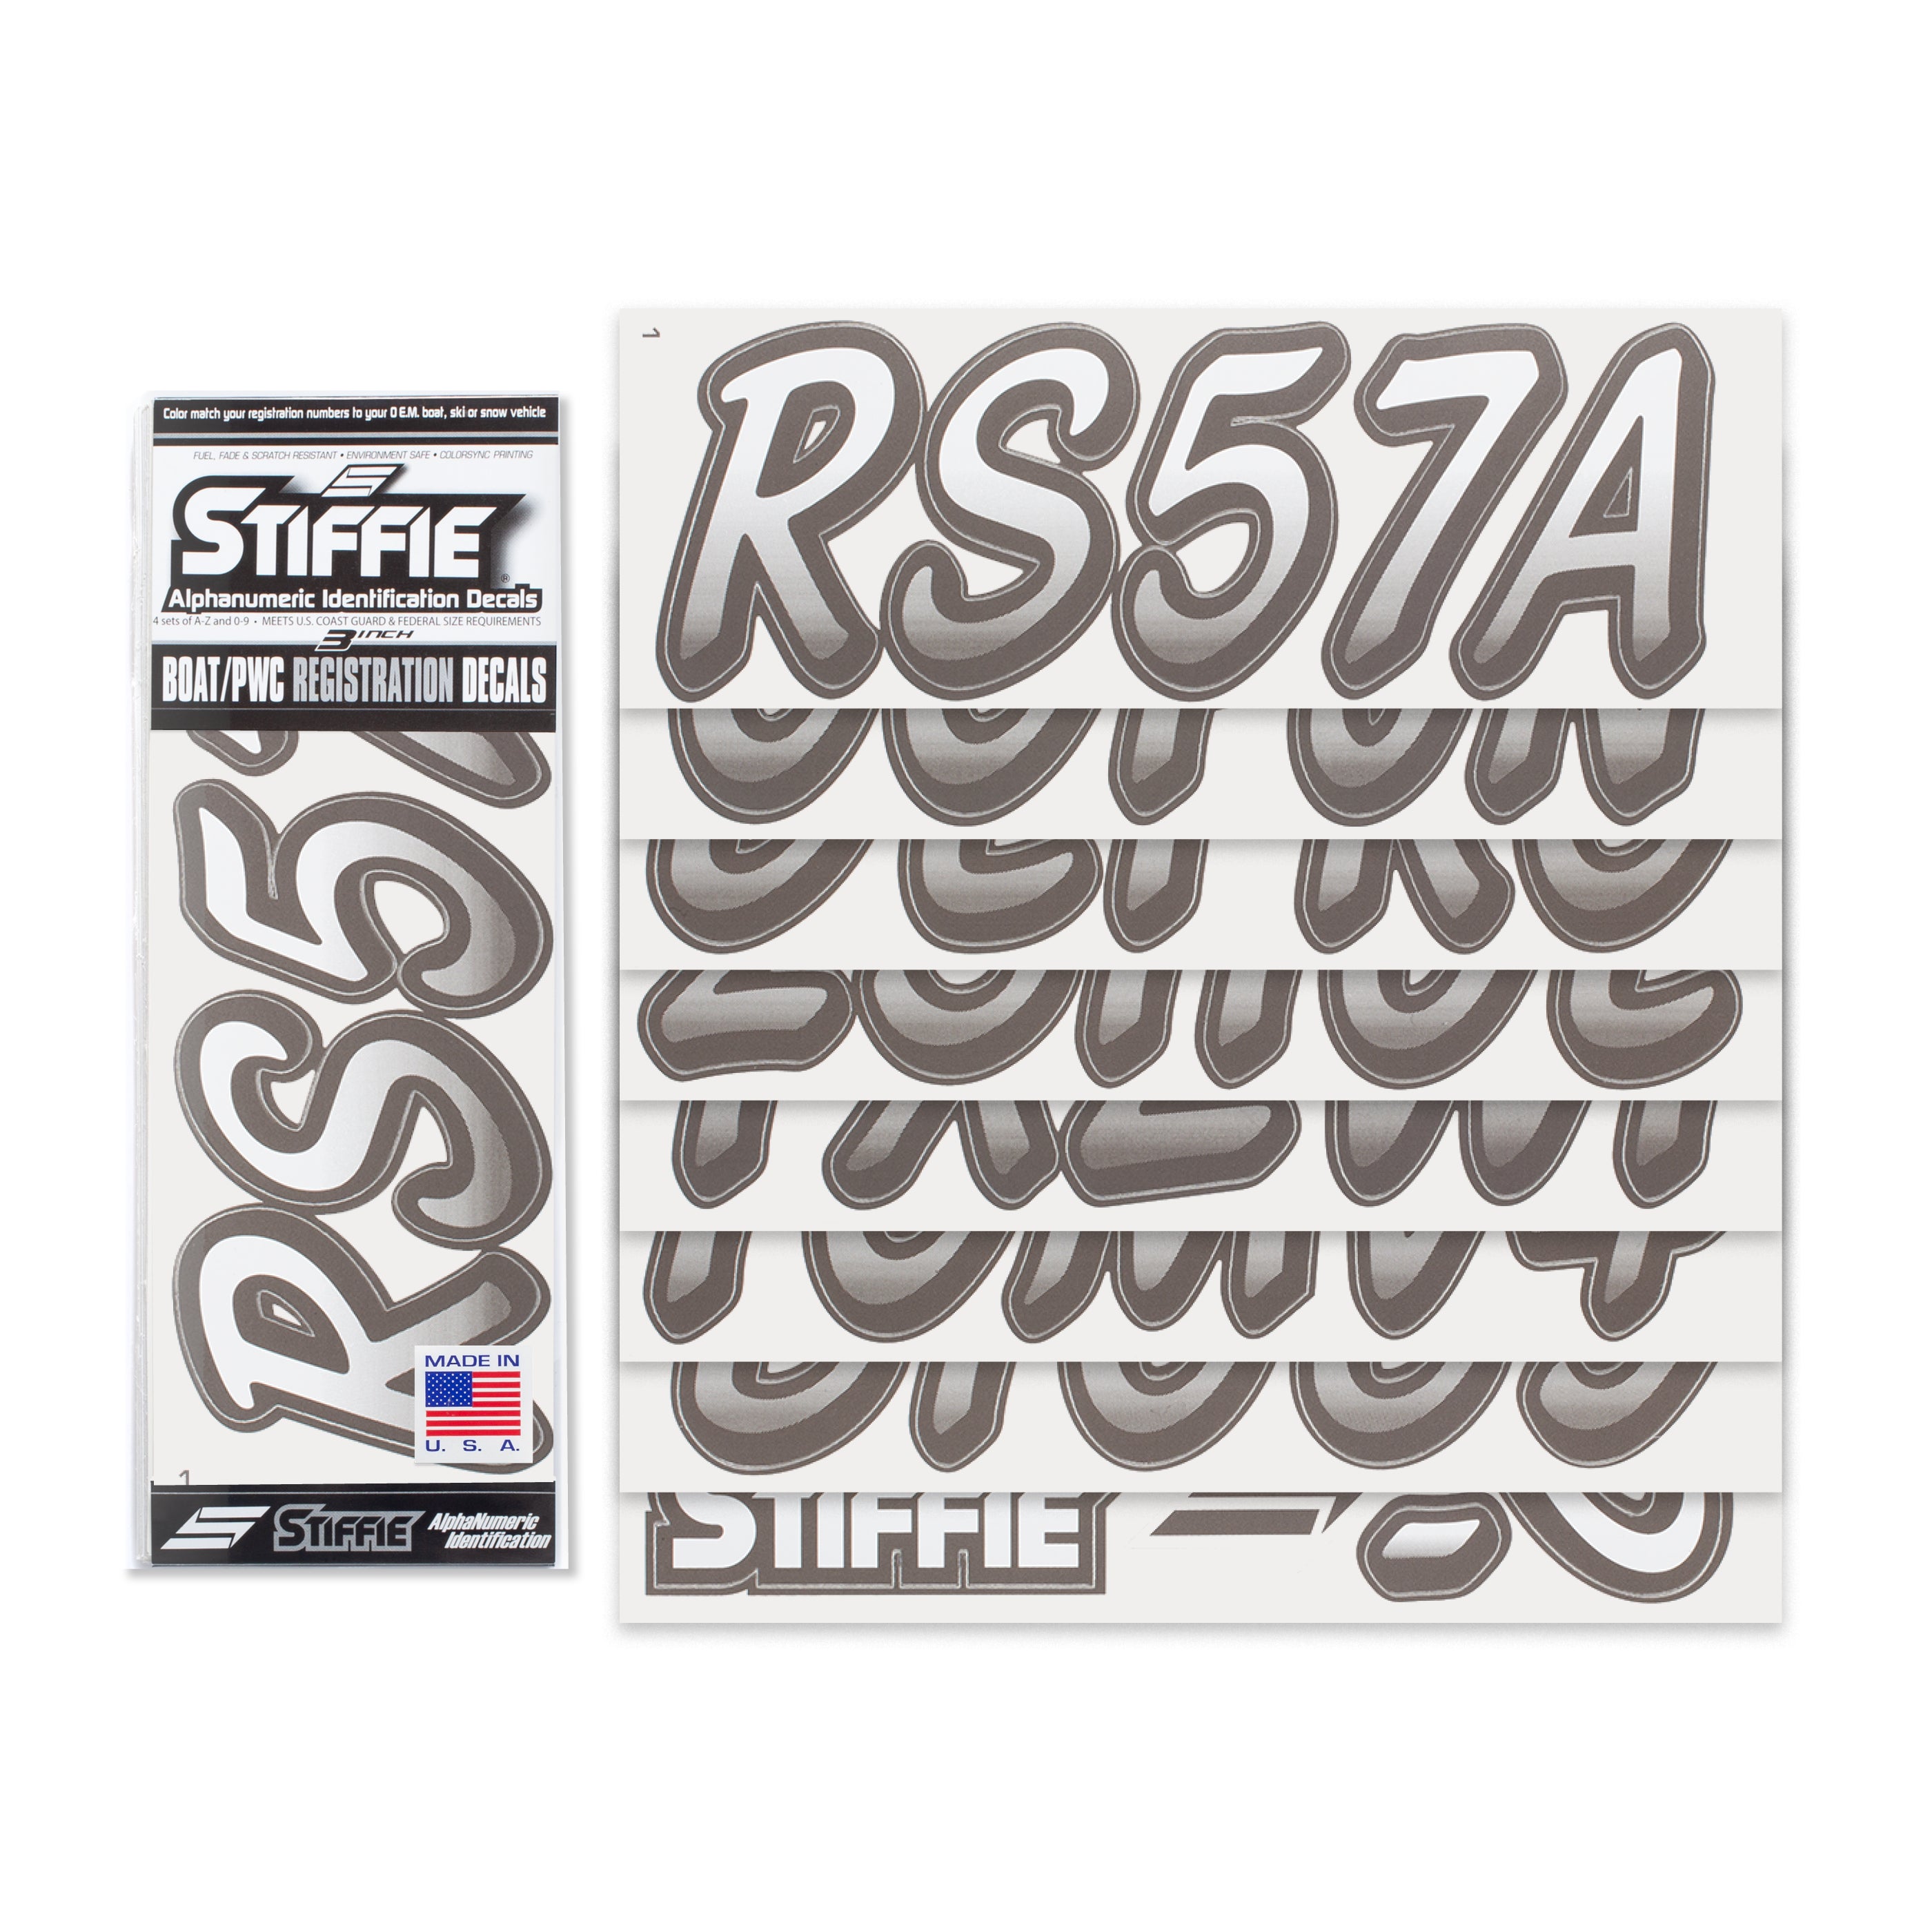 Stiffie Whipline White/Carbon 3" Alpha-Numeric Boat Registration Numbers Identification Stickers Decals: Matches Yamaha WaveRunner VX Cruiser, VX and EX Deluxe